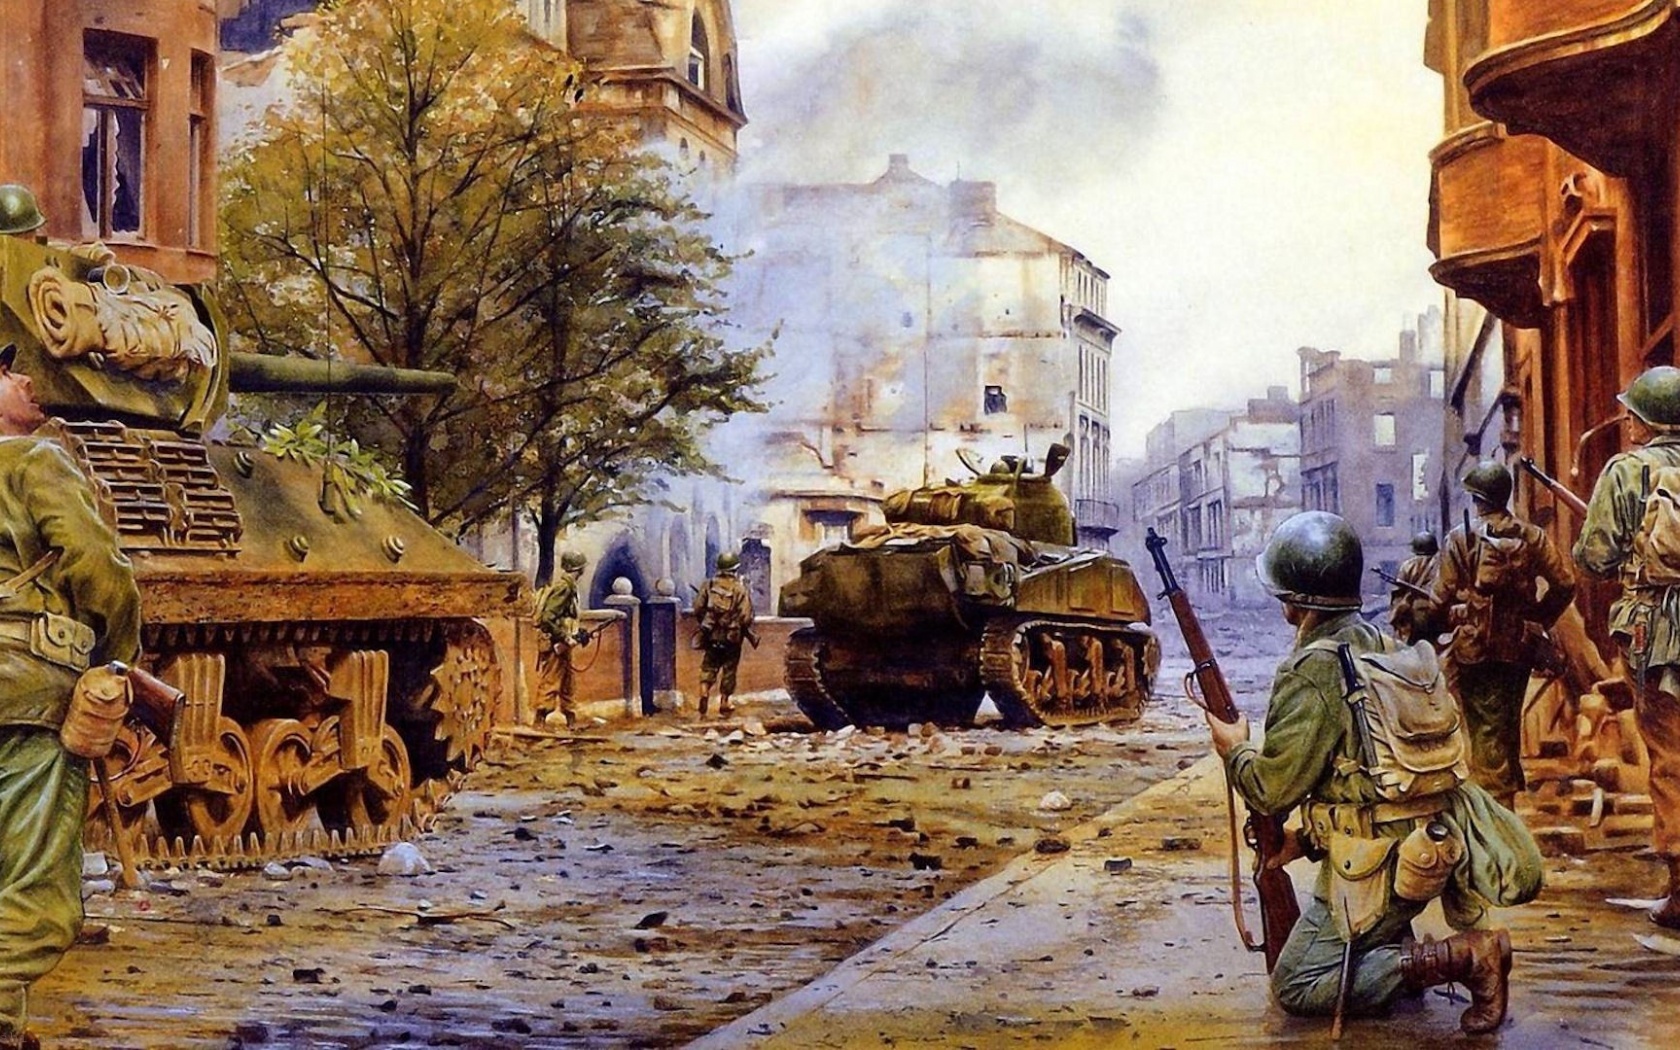 War Americans Tanks City Ruins Devastation Soldiers Battle Sherman Street Smoke Buildings Military Other